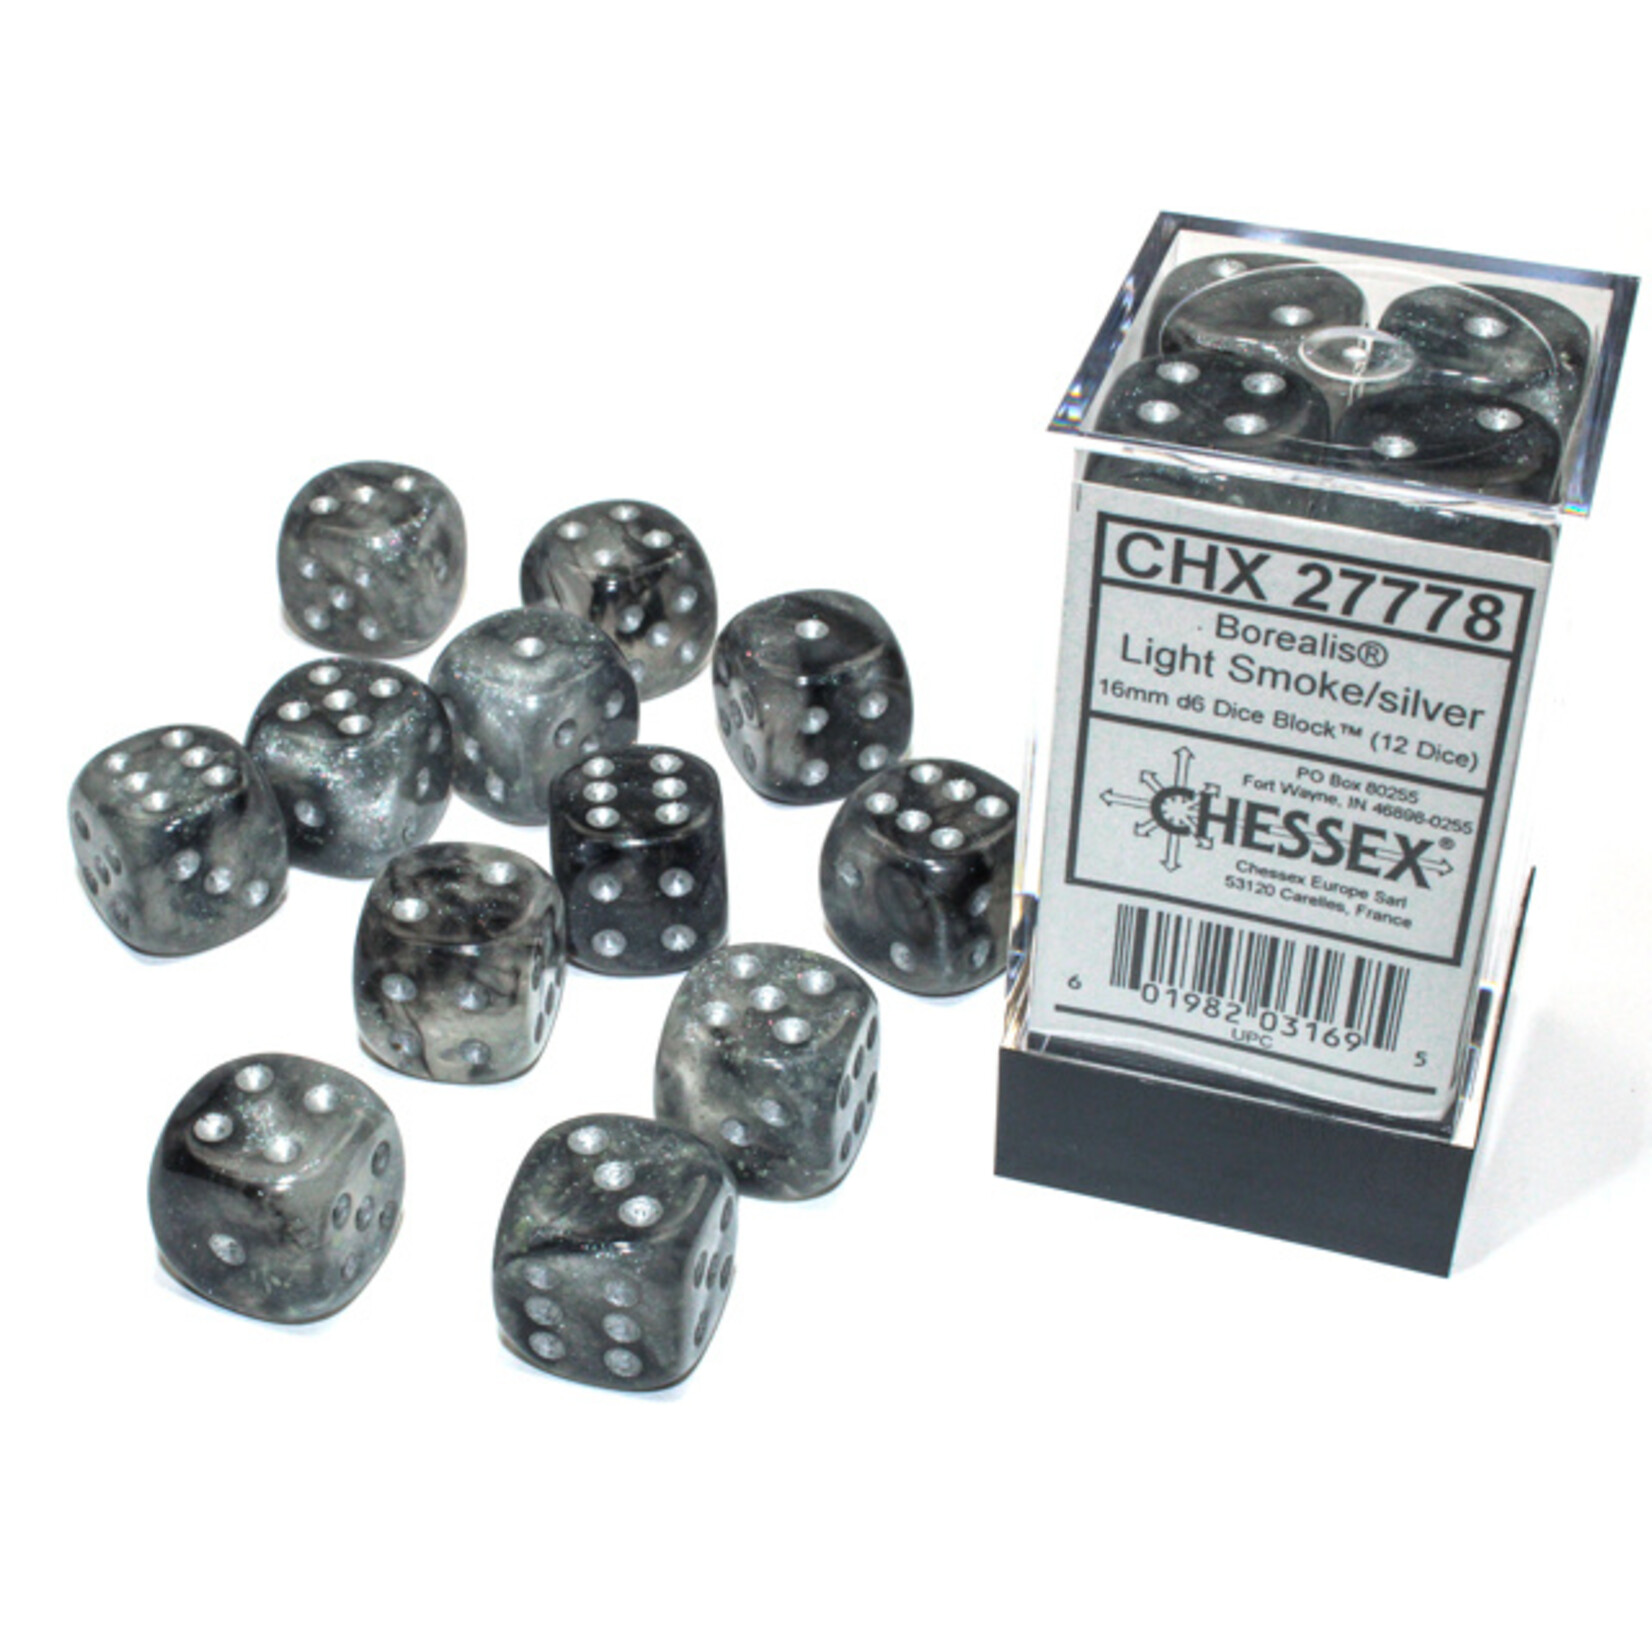 Chessex Chessex 12 x D6 Set Borealis Luminary 16mm - Light Smoke/Silver